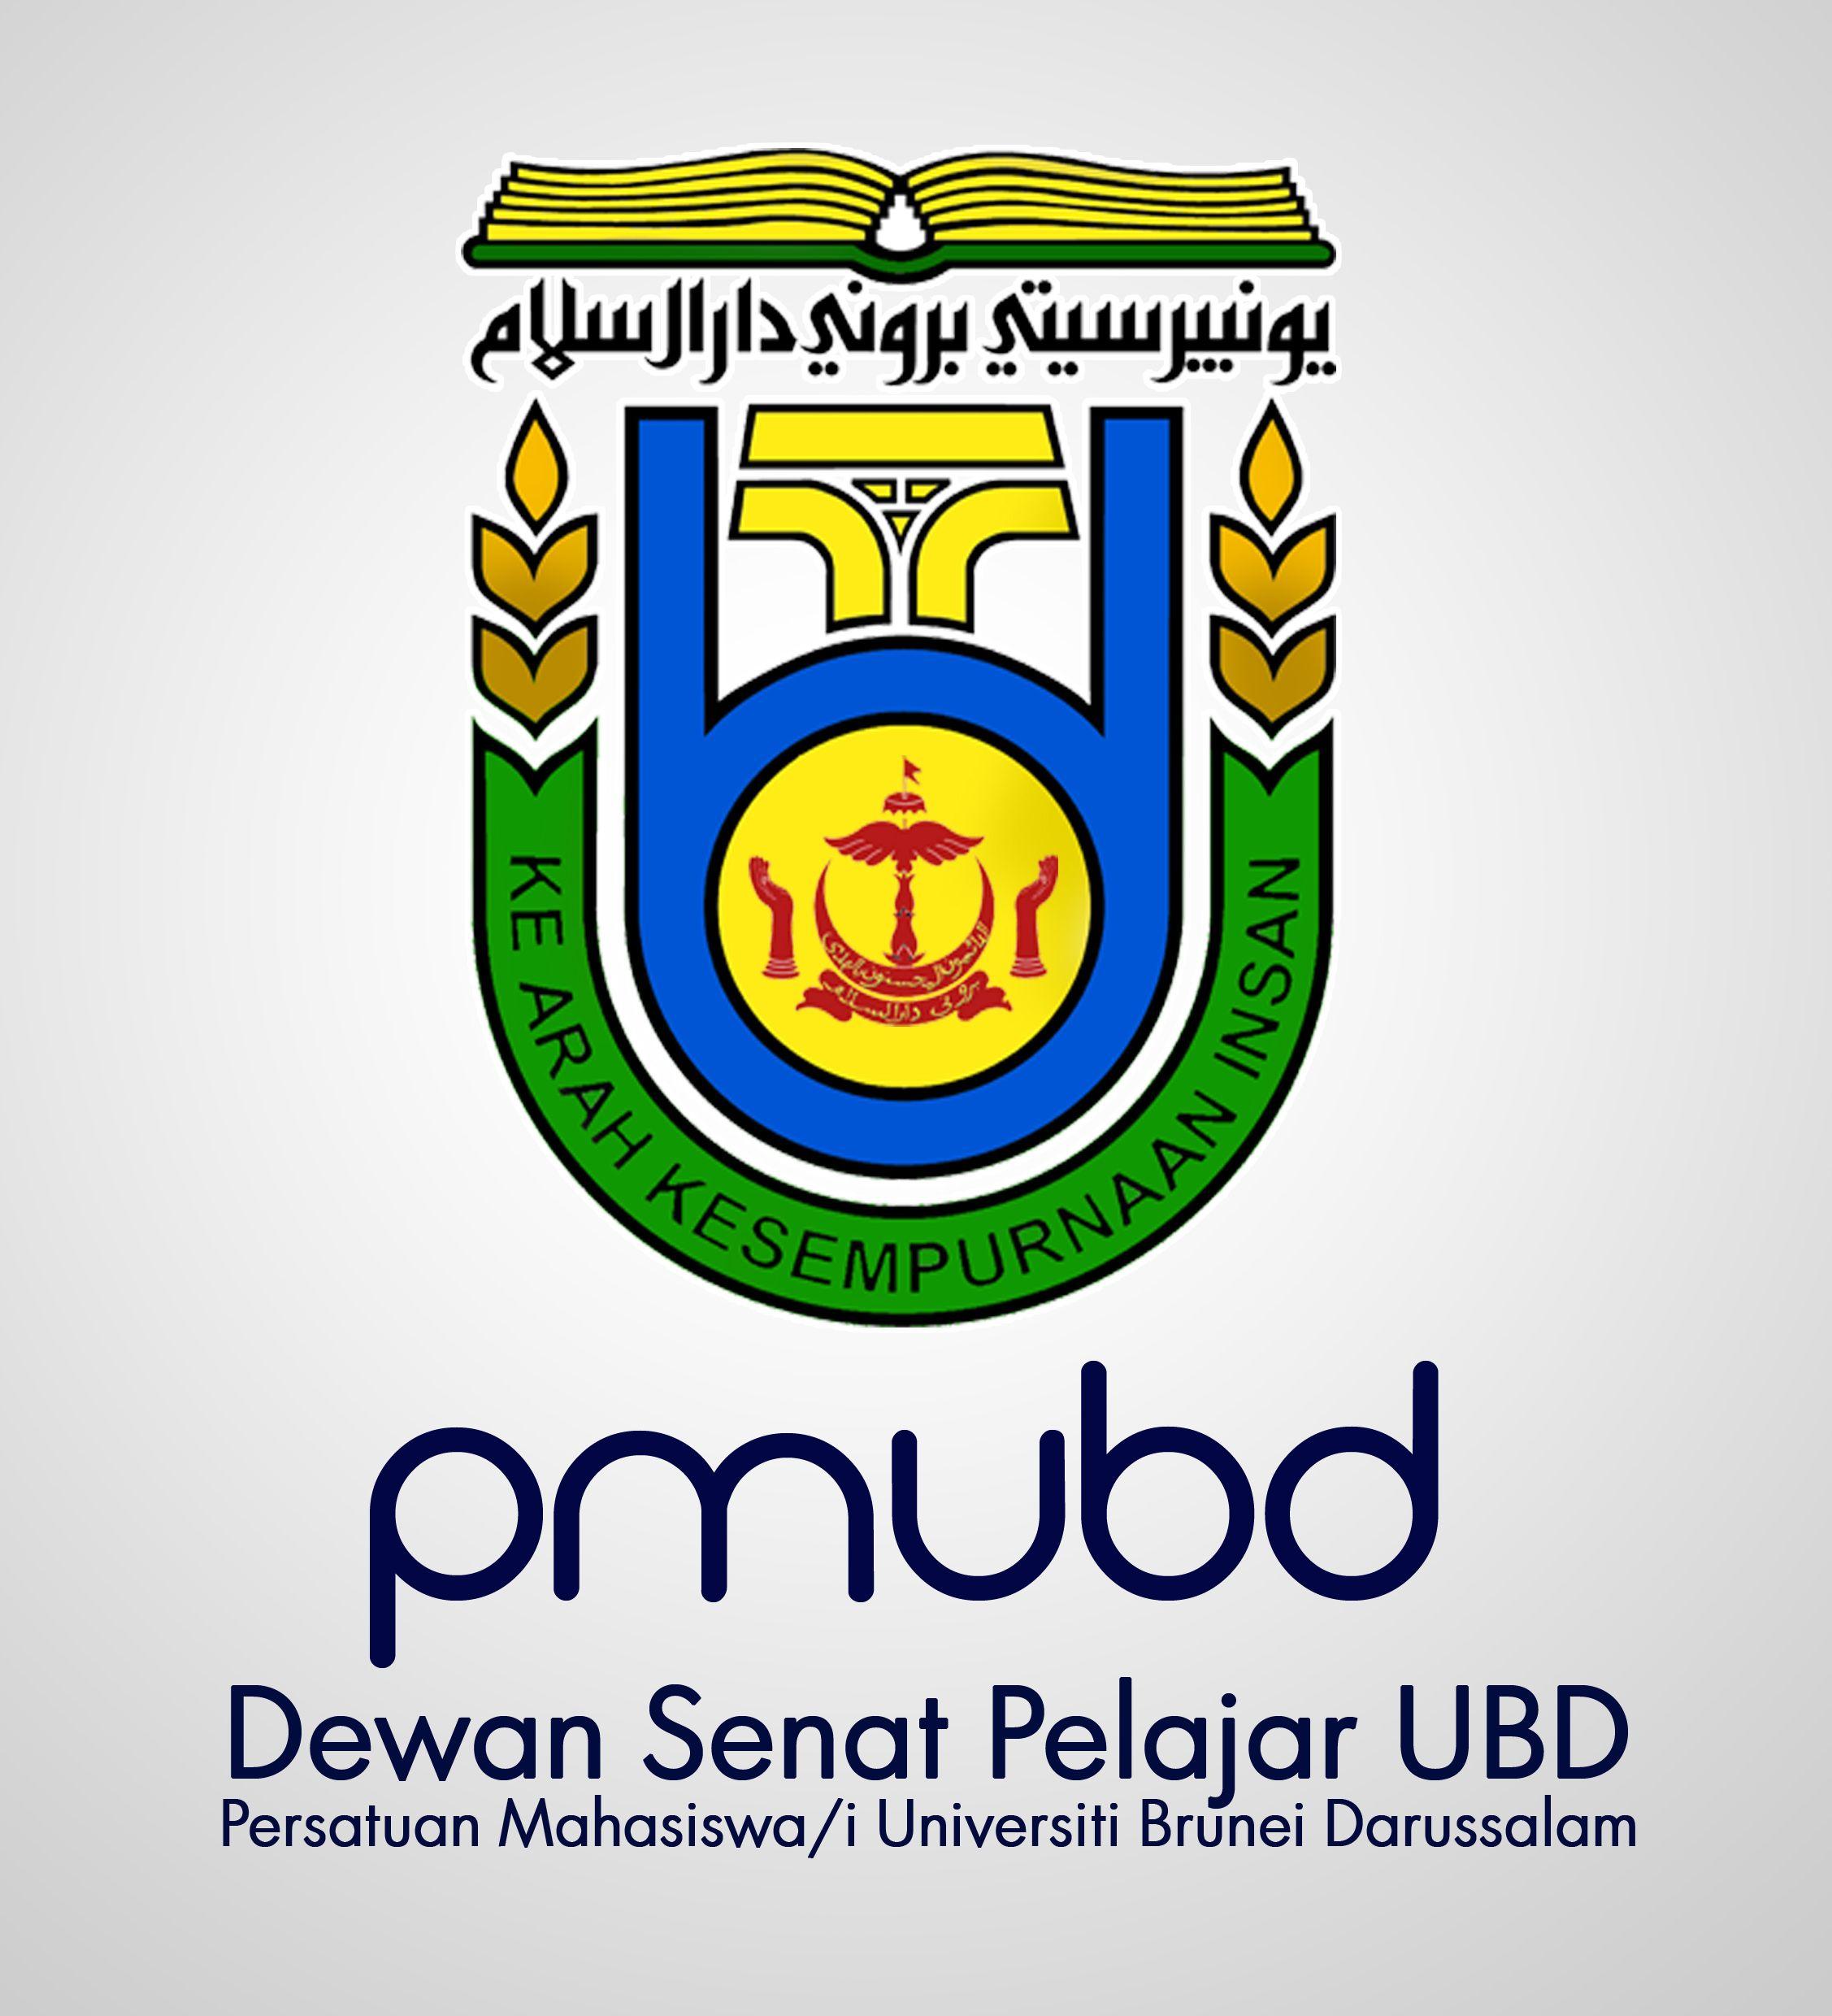 Senate Logo - Senate Logo. Persatuan Mahasiswa Mahasiswi Universiti Brunei